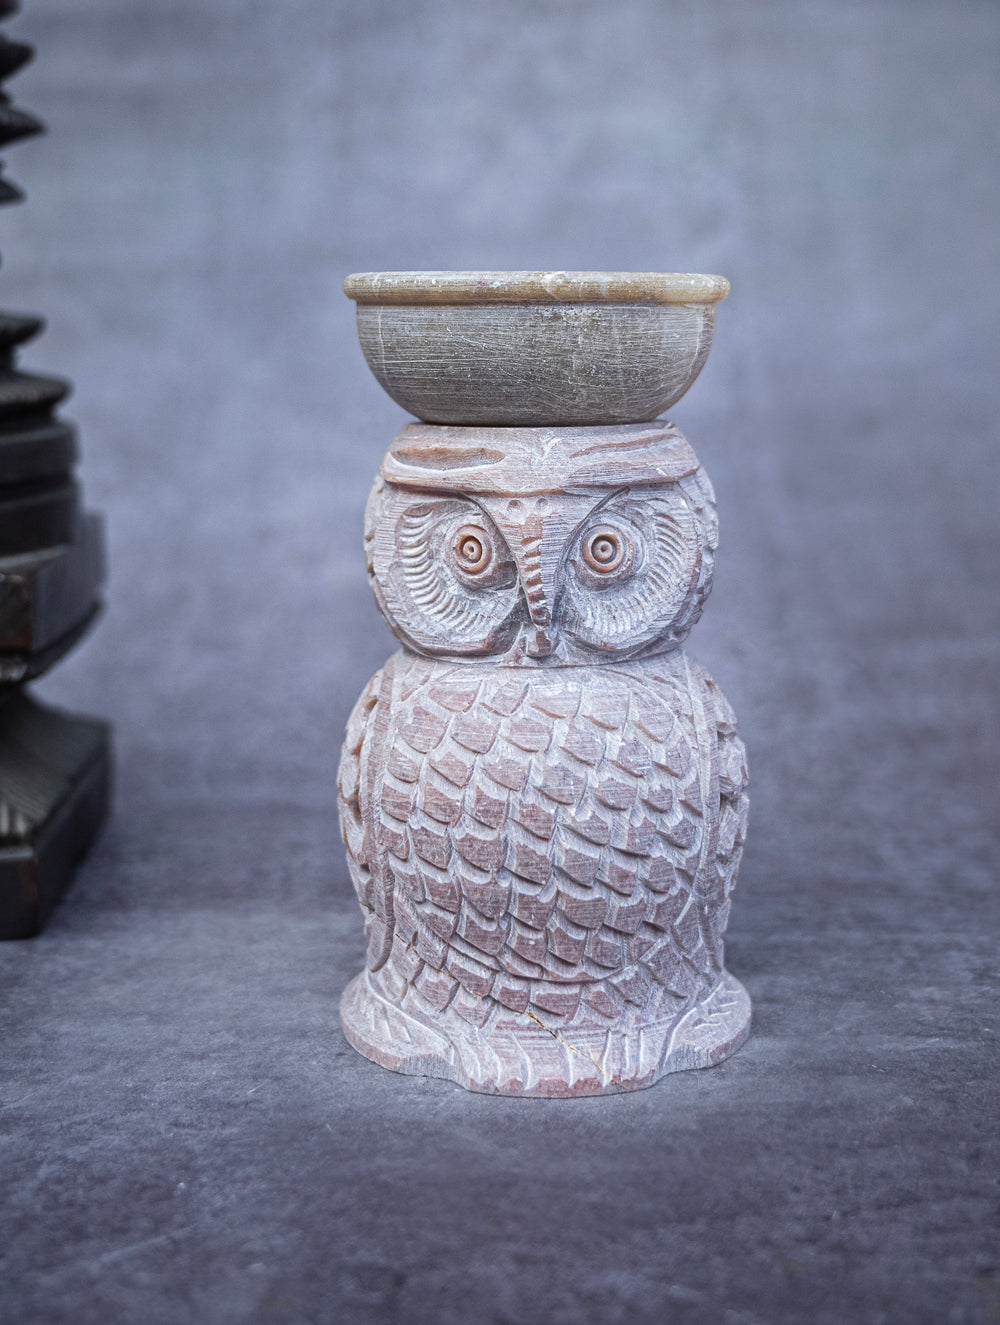 Load image into Gallery viewer, Soapstone Filigree Owl Tea Light Holder